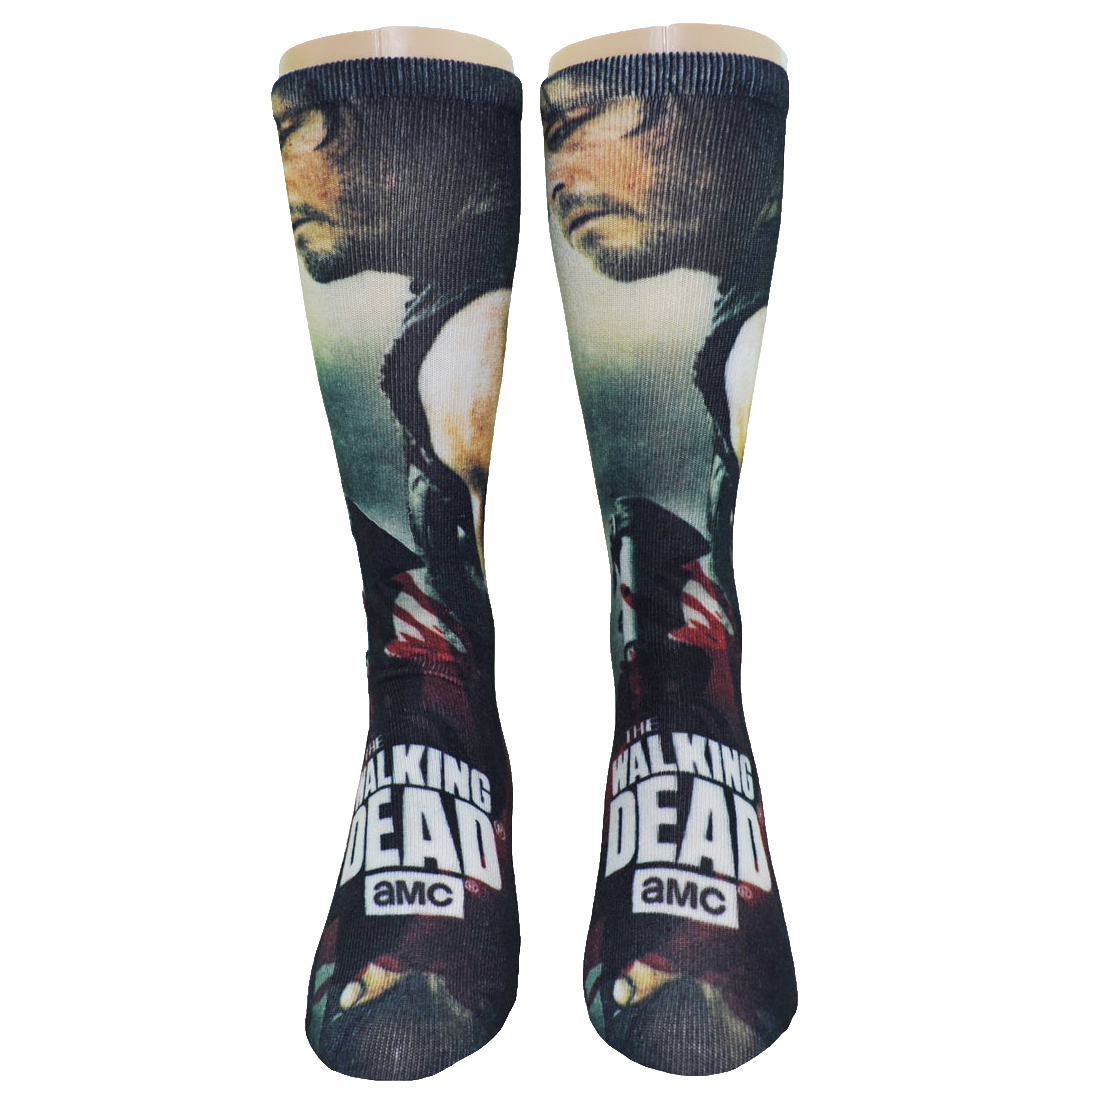 Walking Dead Daryl Dixon 360 Print Socks - 1 Pair